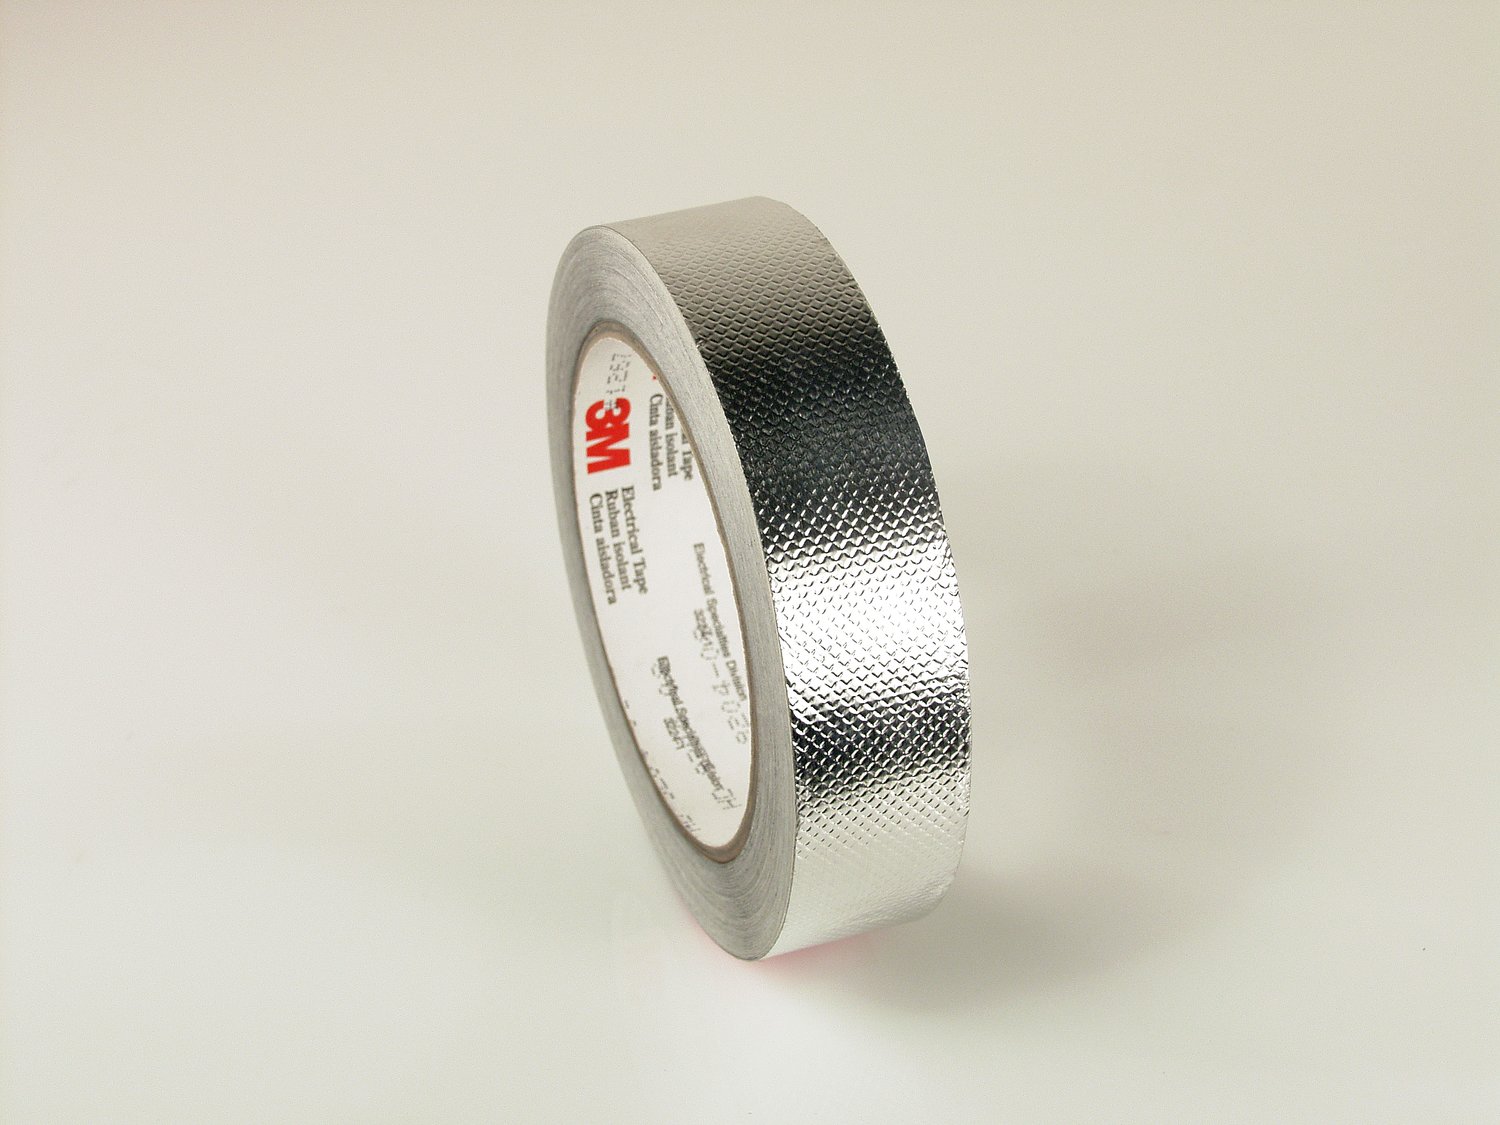 7100018396 - 3M Embossed Aluminum Foil EMI Shielding Tape 1267, 2 in x 18 yd, 3 in
Paper Core, 6 Rolls/Case